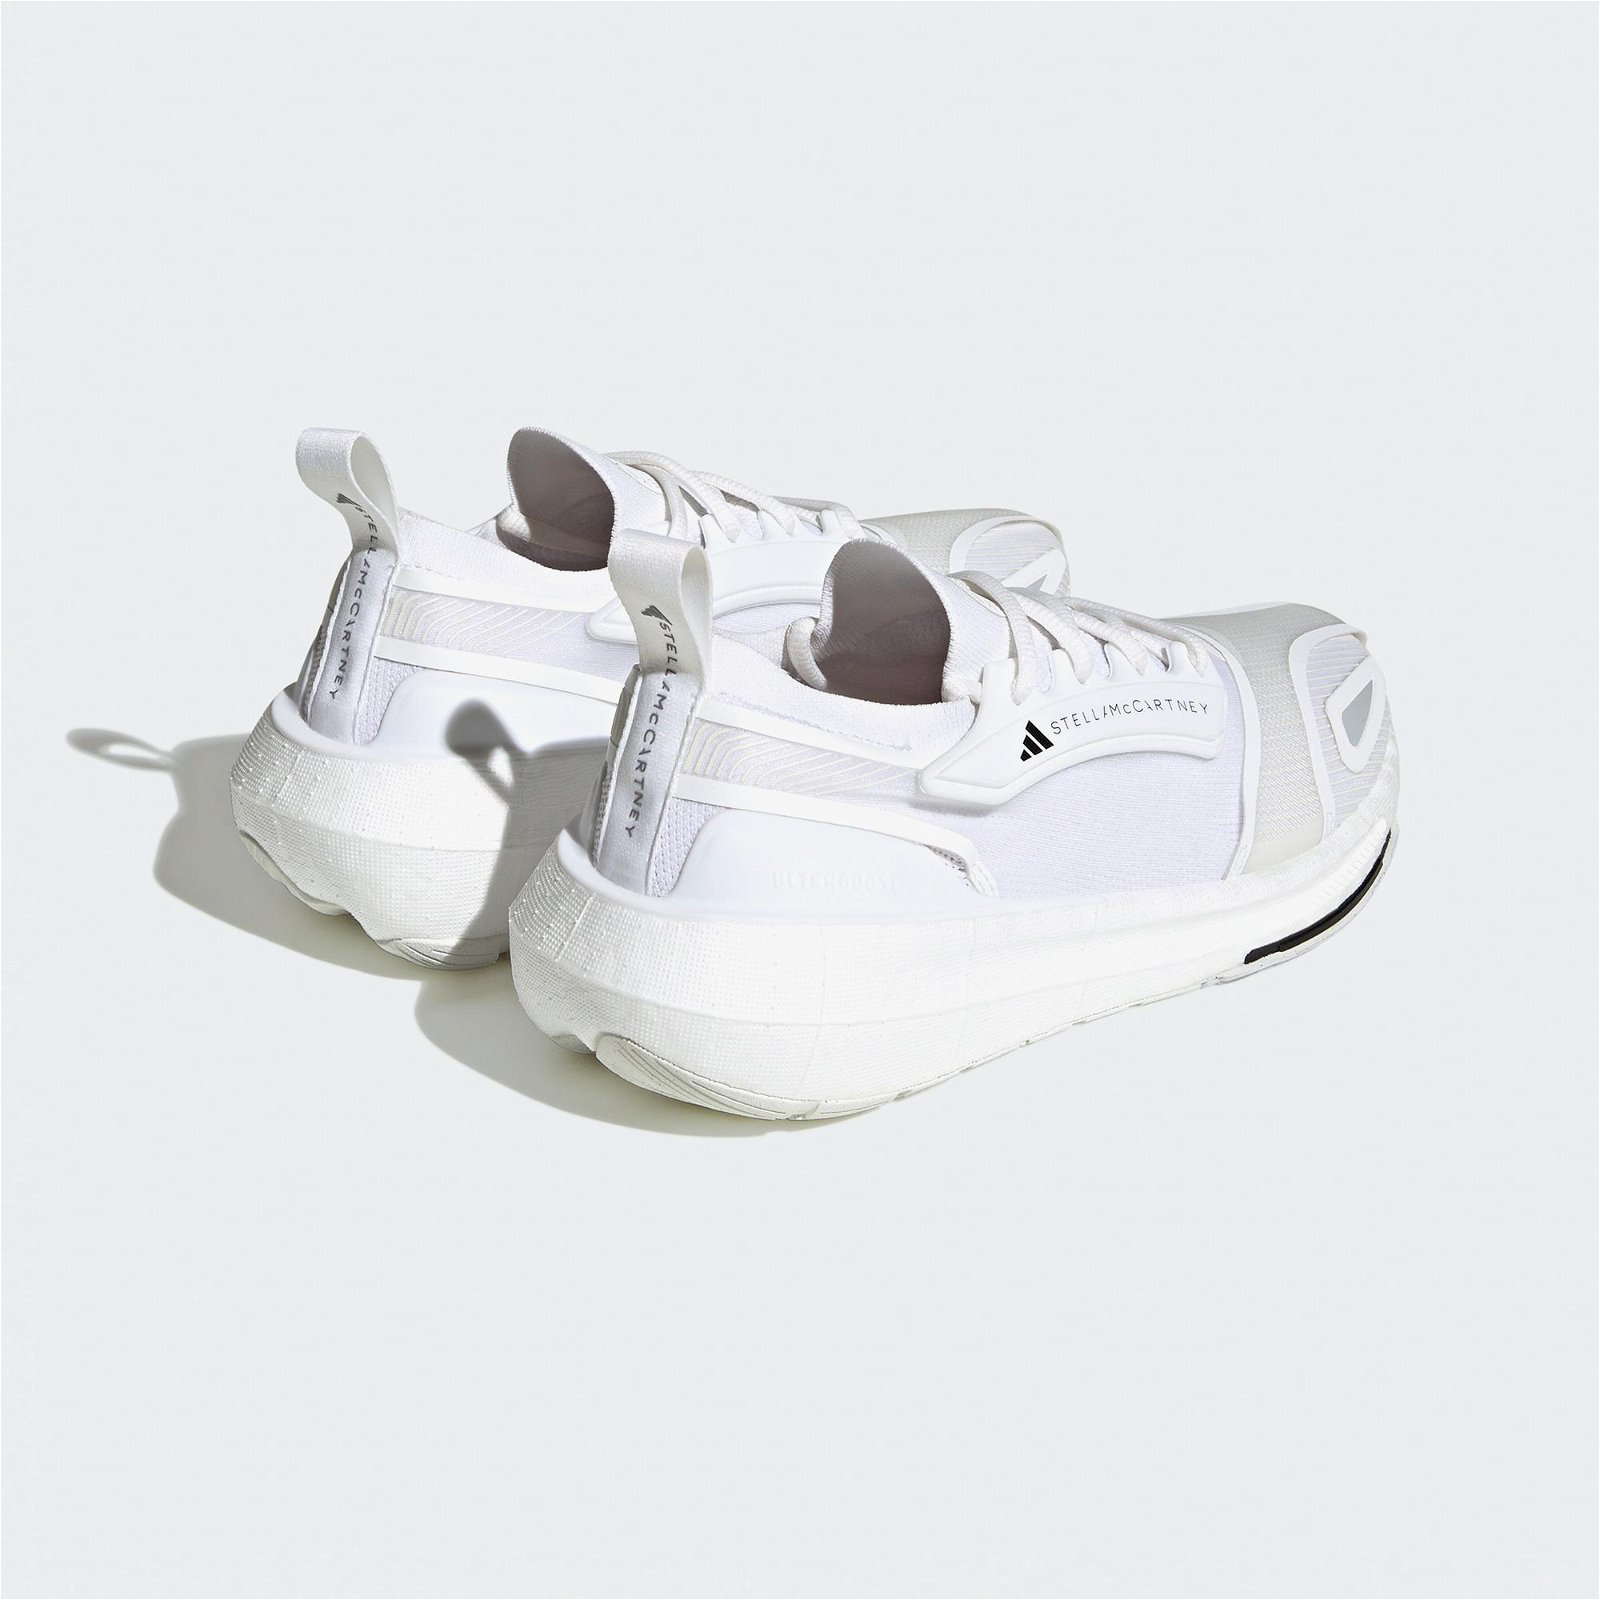 adidas Stella McCartney Court Ub 23 Lower Kadın Beyaz Sneaker